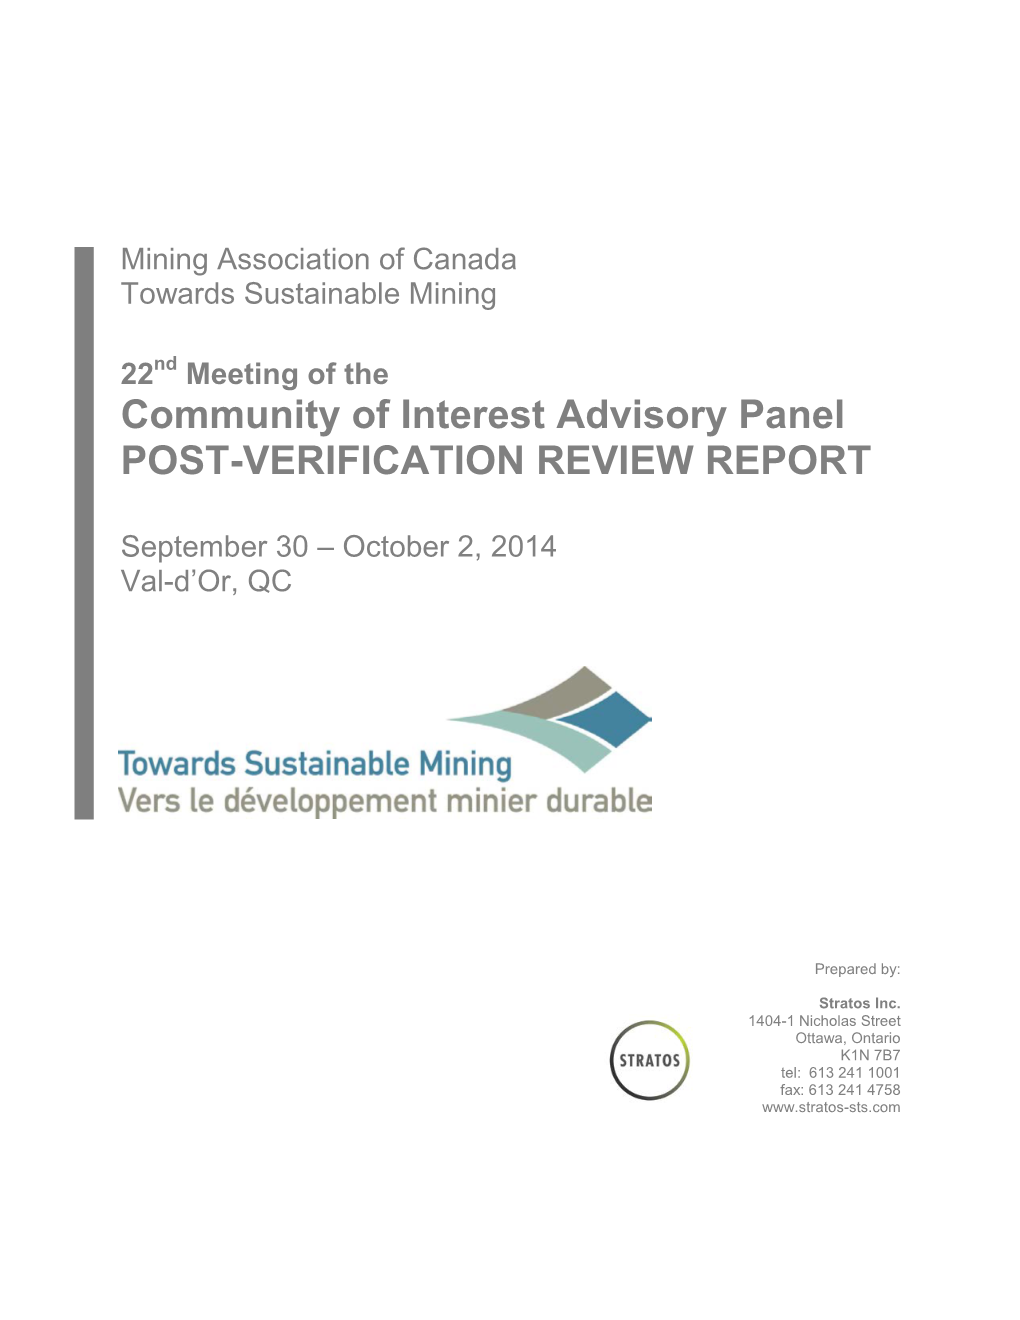 Community of Interest Advisory Panel POST-VERIFICATION REVIEW REPORT